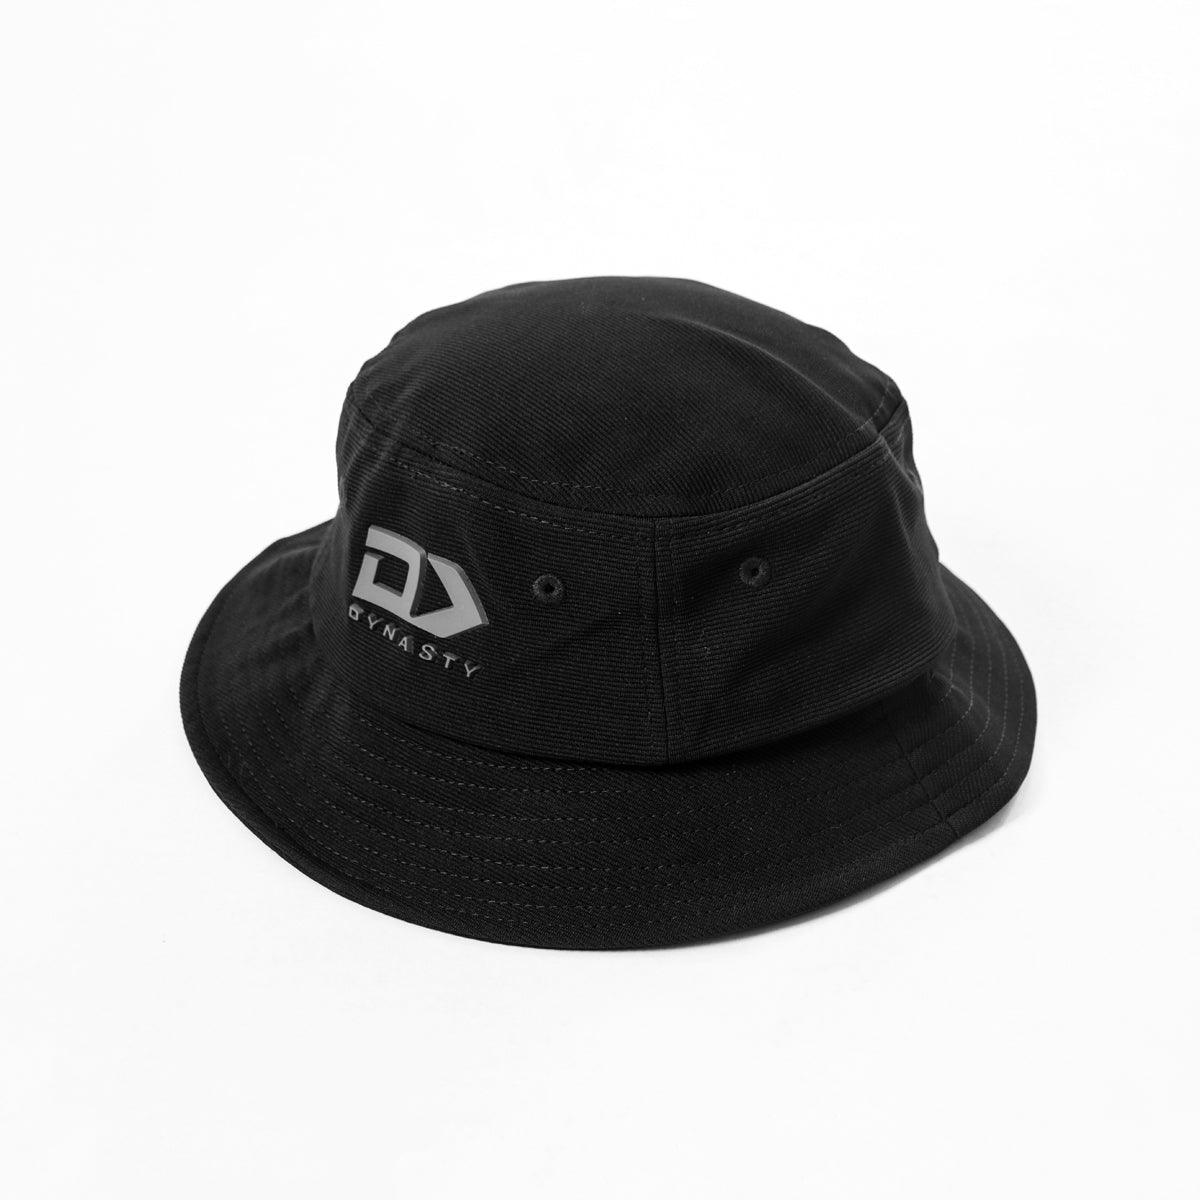 DS Black Bucket Hat